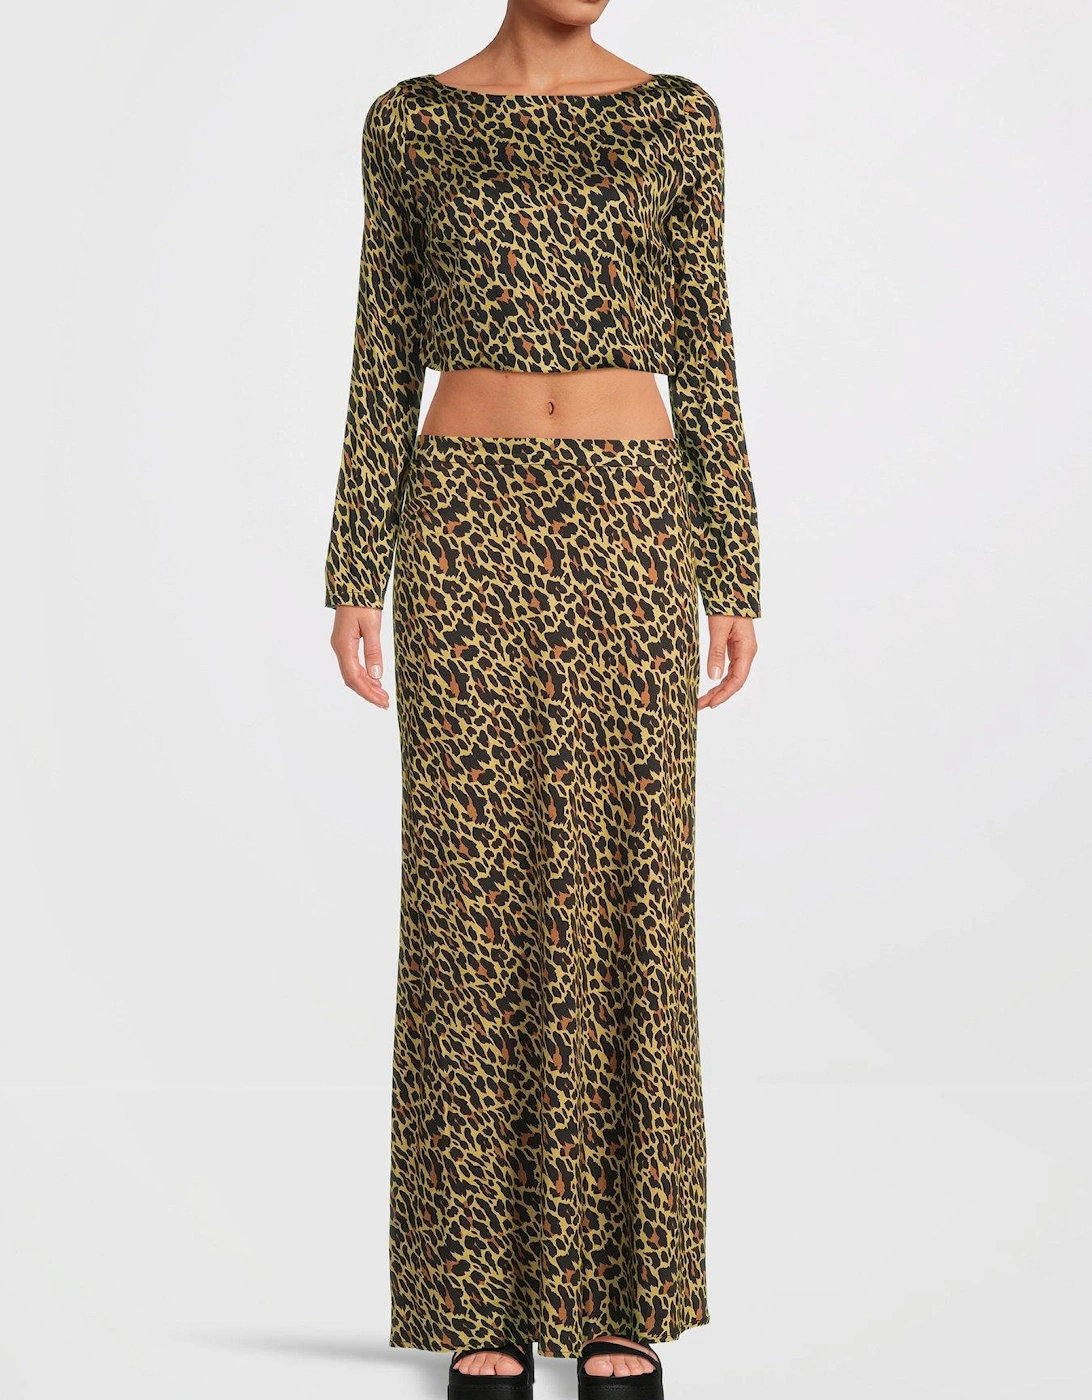 Bernie Maxi Leopard Skirt